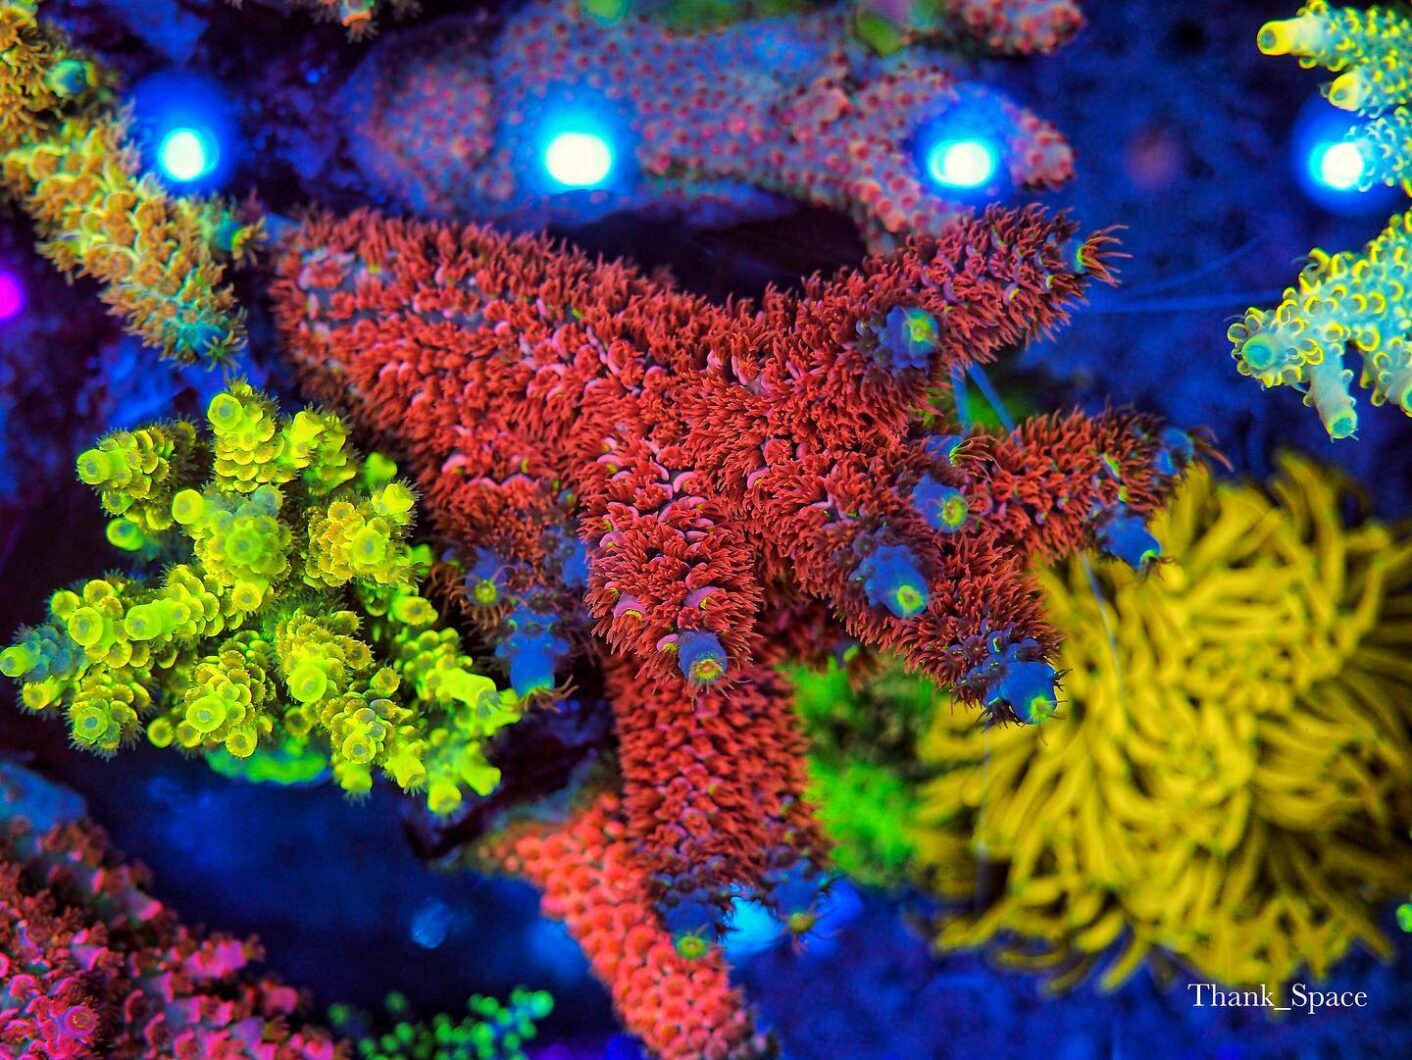 Barra led Orphek OR3 azul mais recife de coral